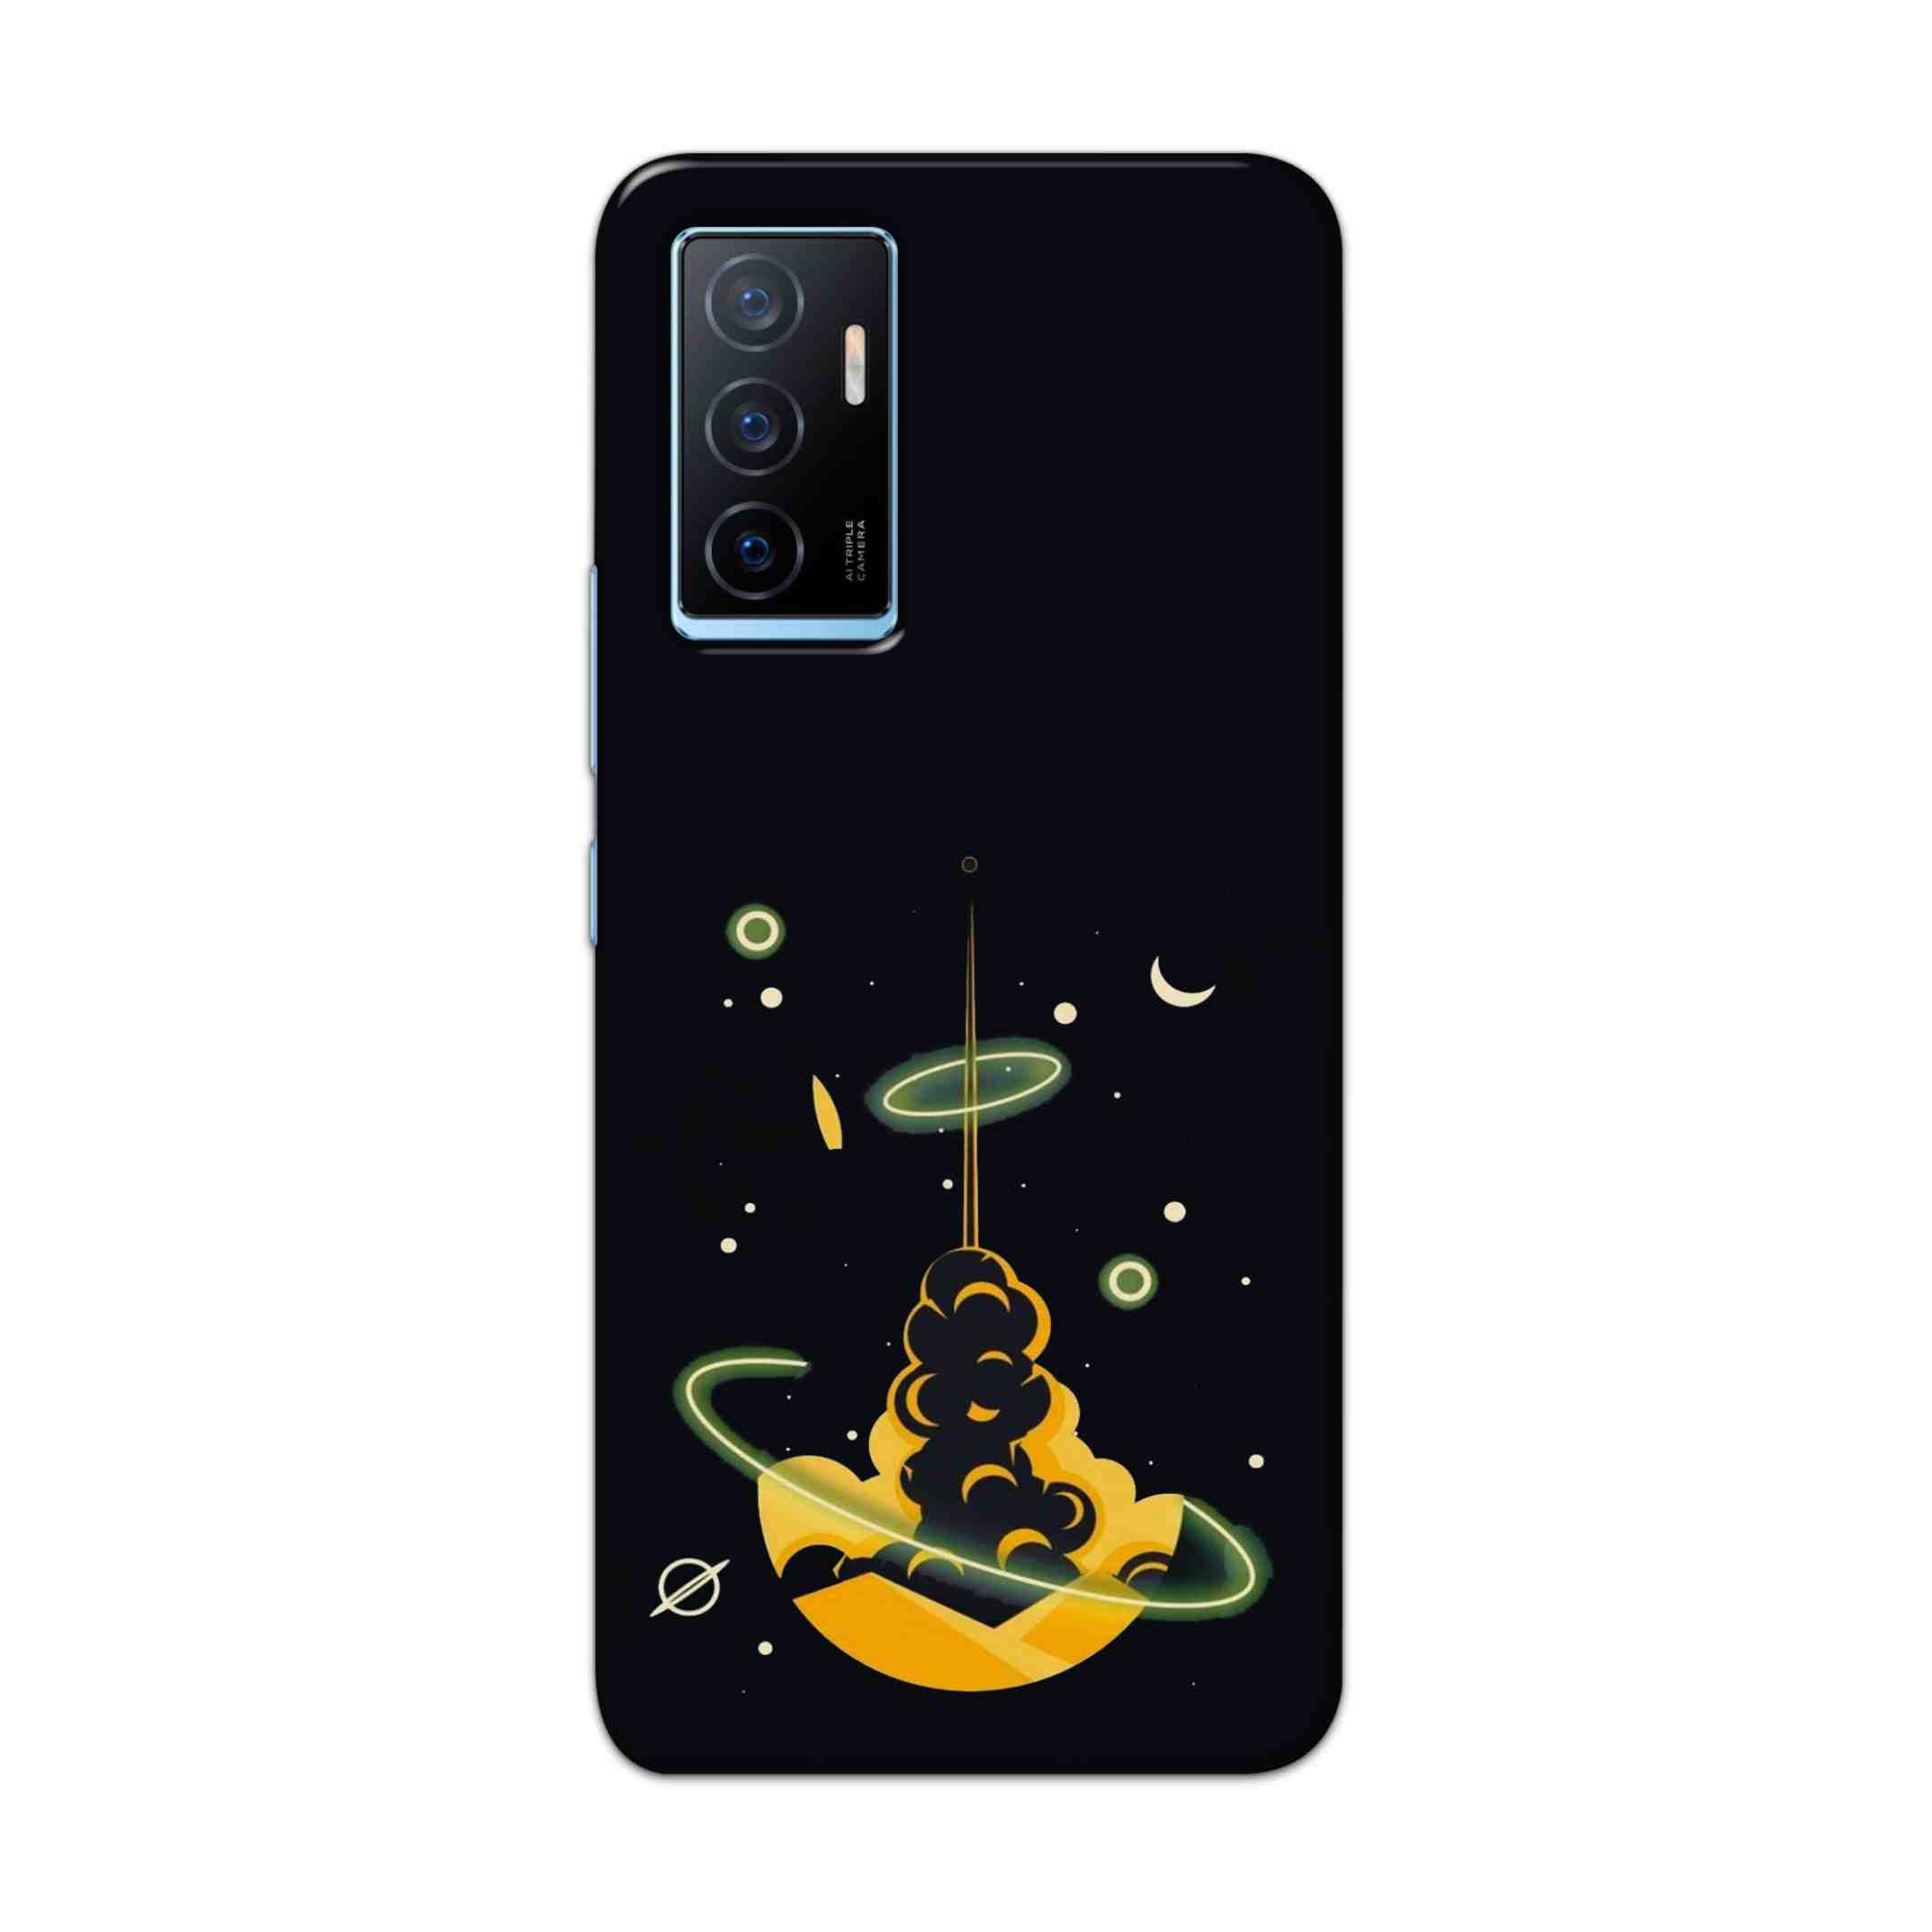 Buy Moon Hard Back Mobile Phone Case Cover For Vivo Y75 4G Online